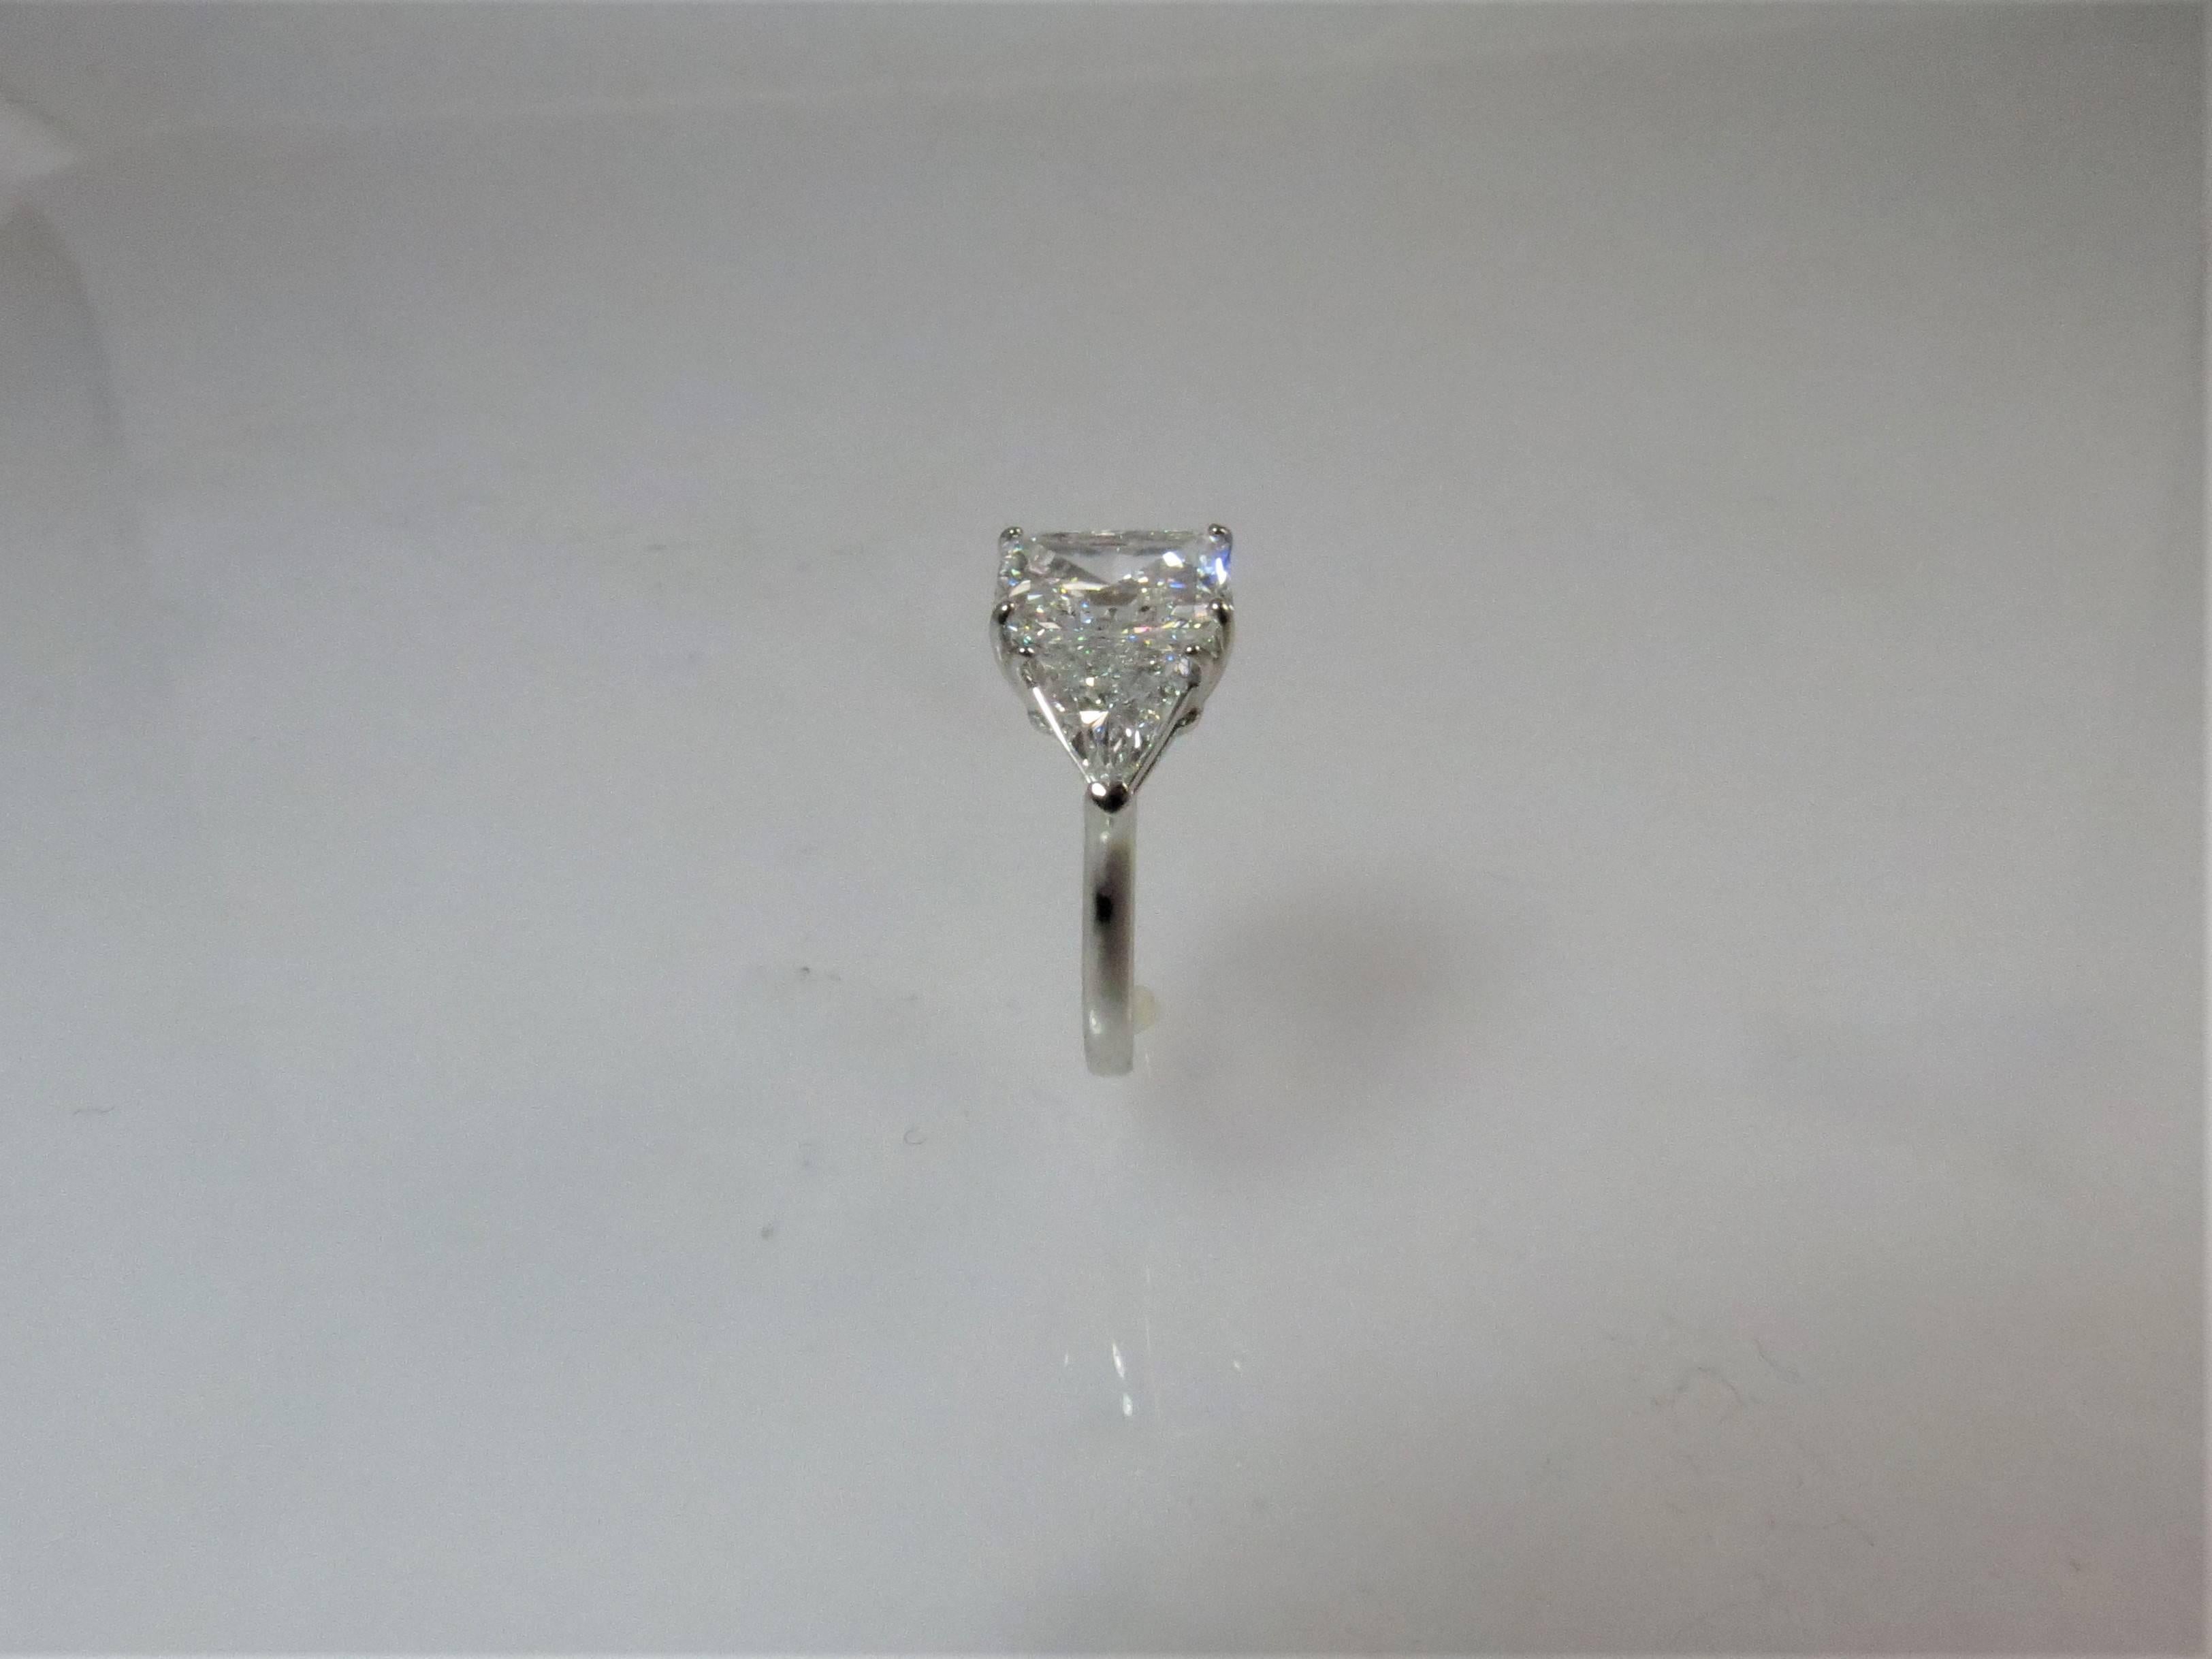 Women's GIA Cert Radiant Cut Diamond, F Color, SI1 Clarity & Trilliants in Platinum Ring